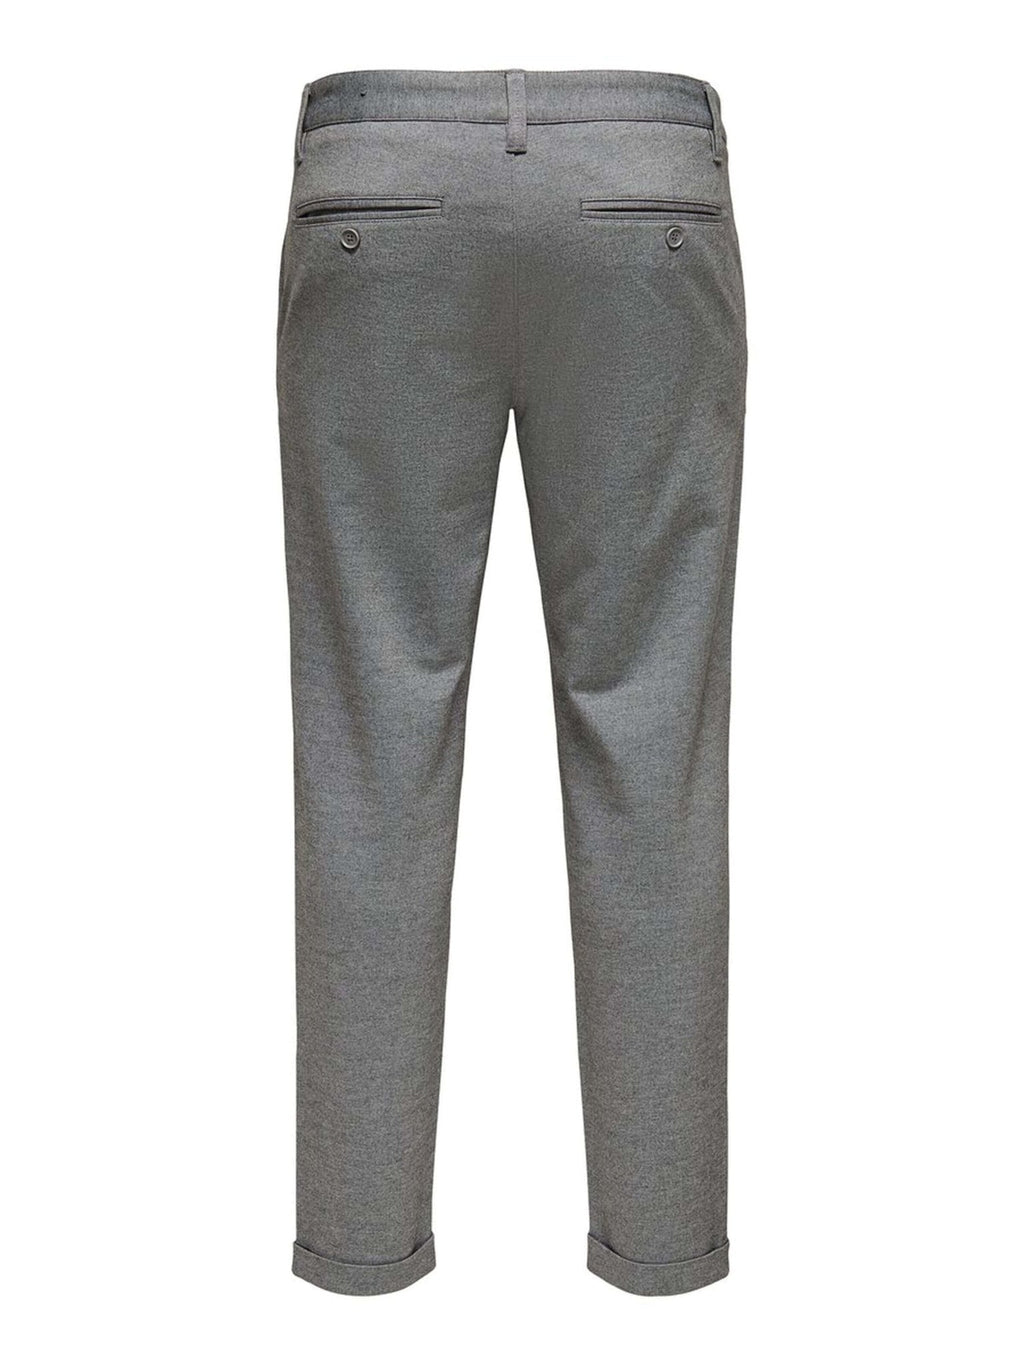 Marcos pantalones laterales - gris claro